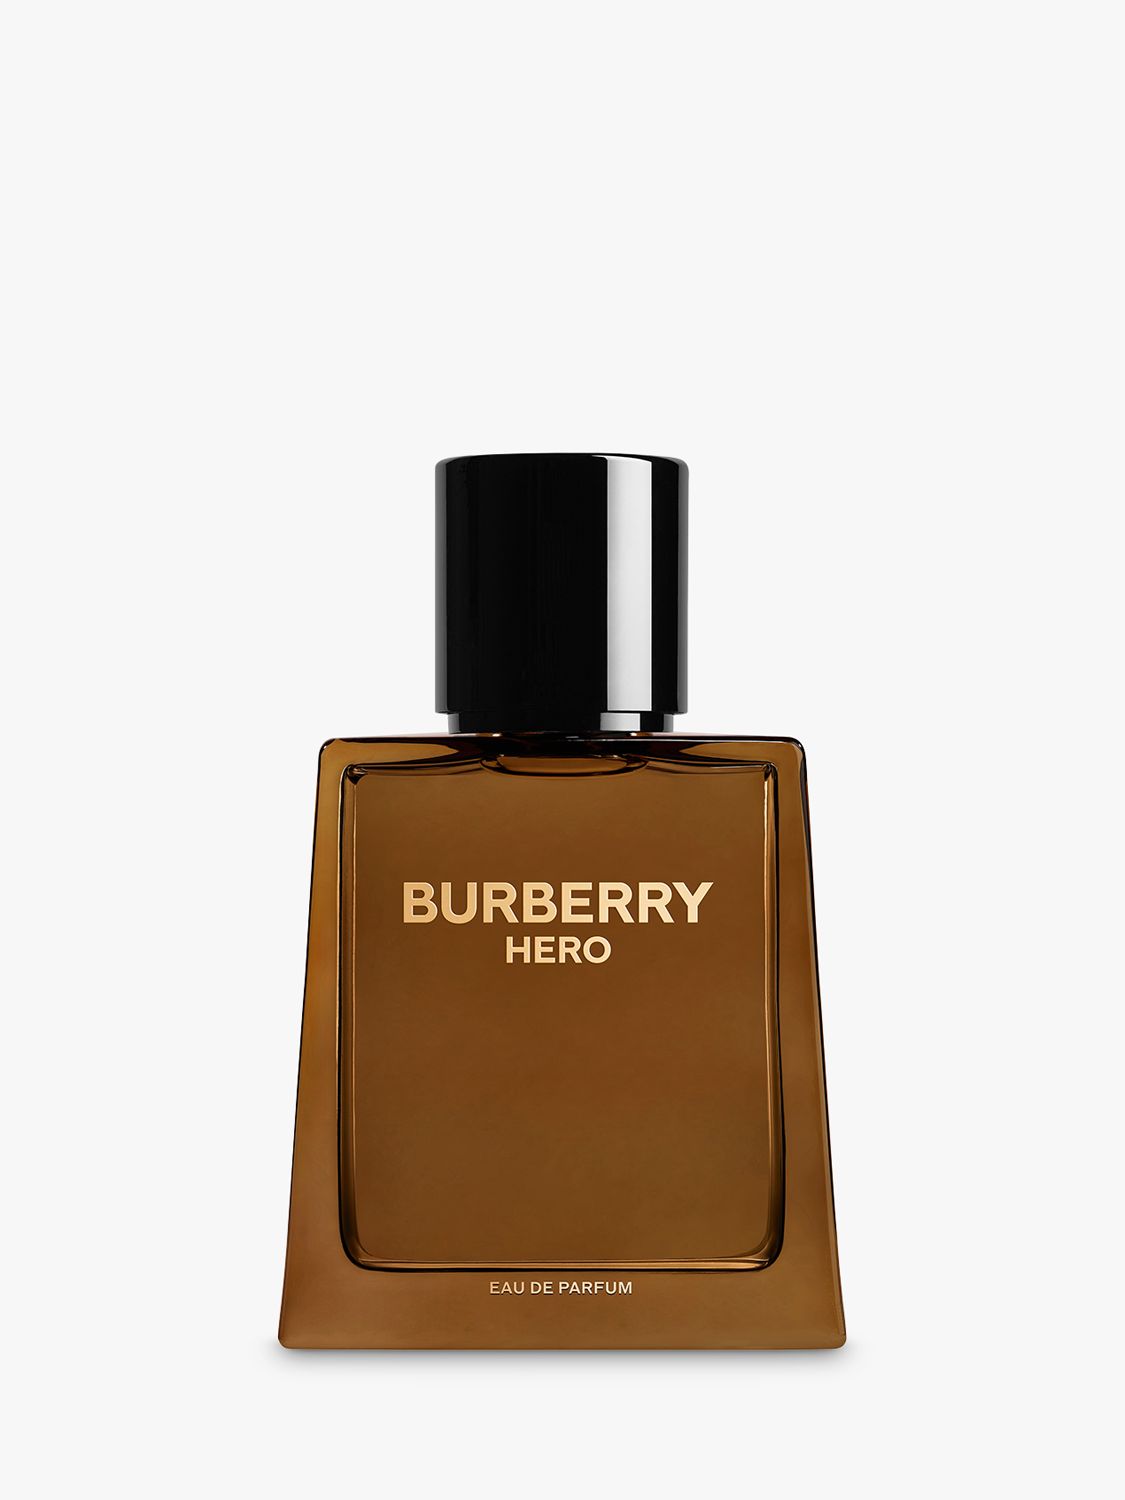 Burberry Hero Eau de Parfum, 50ml at John Lewis & Partners